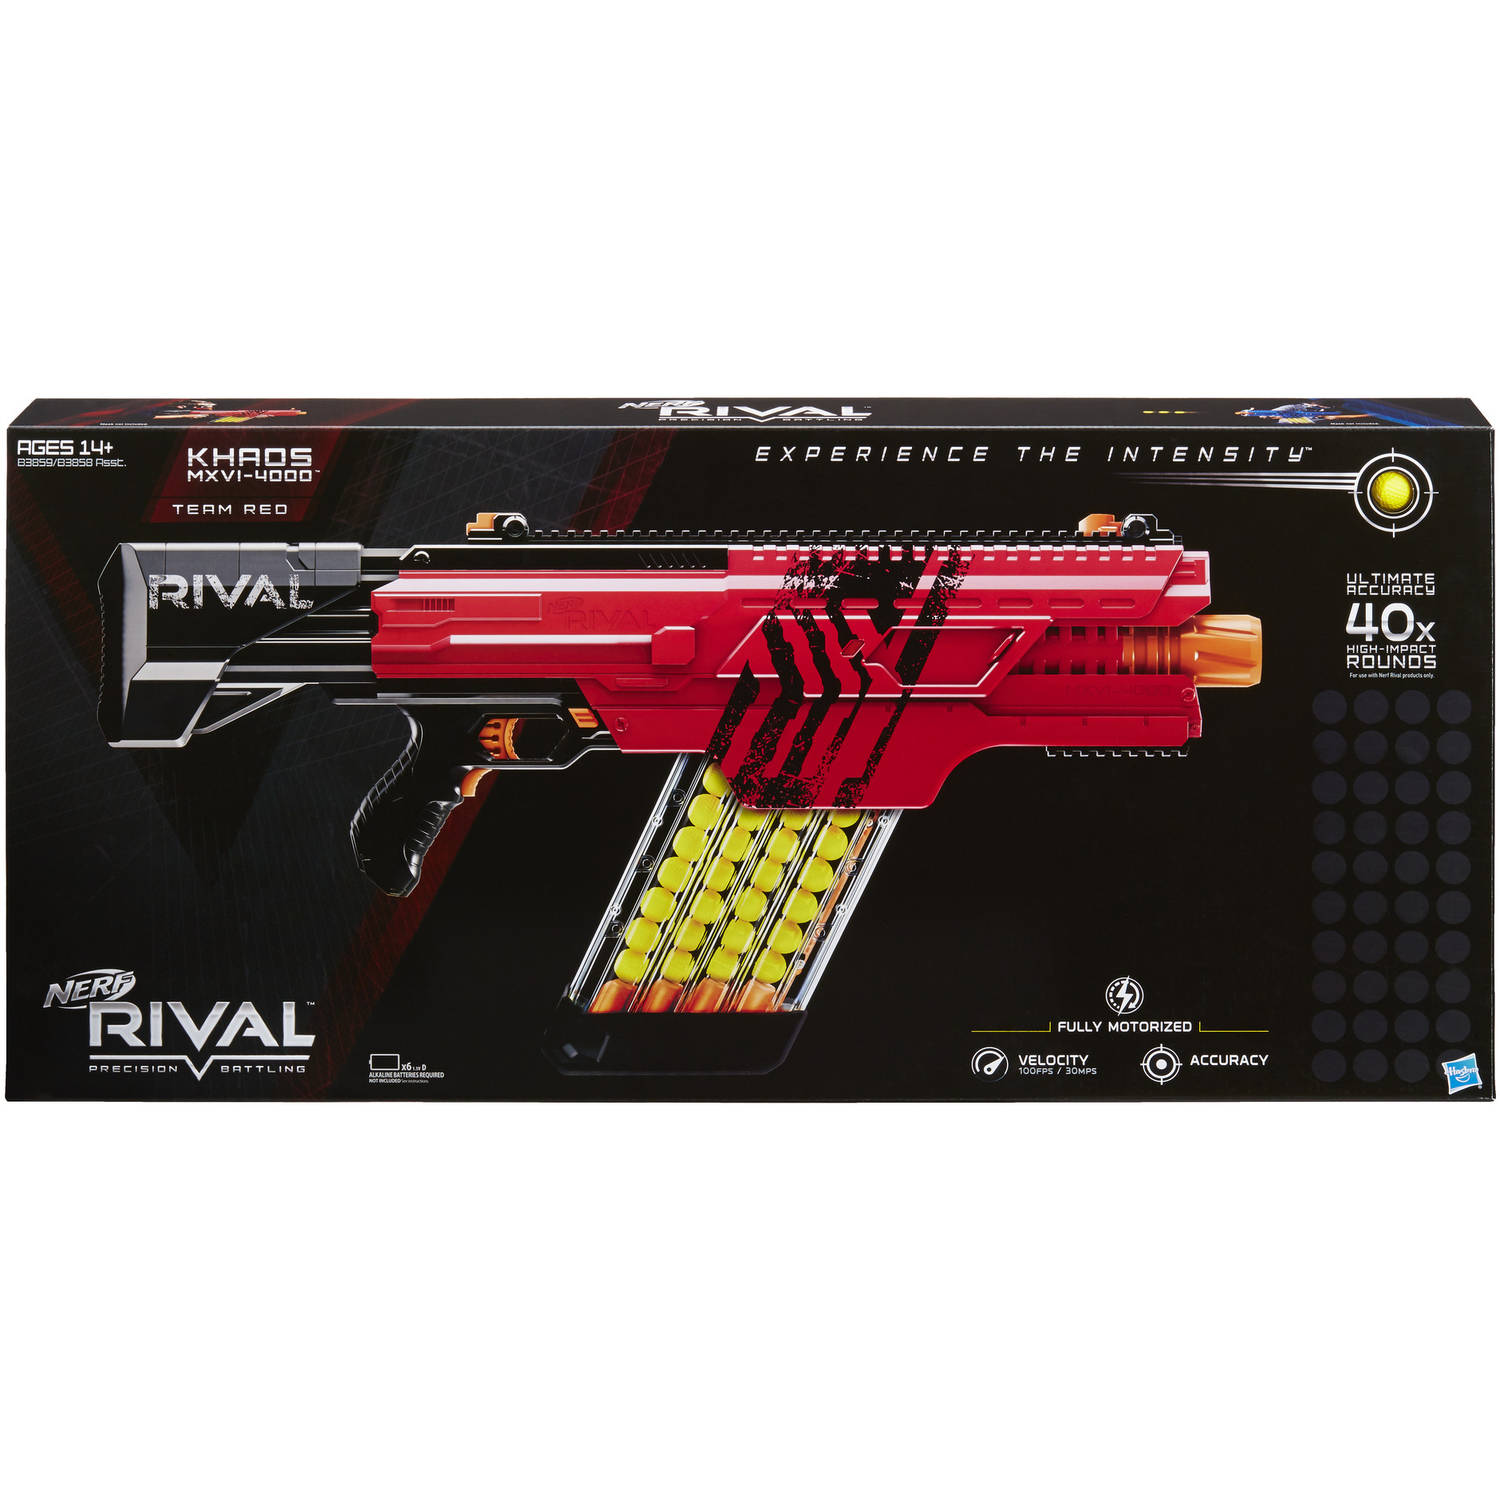 Nerf Rival Khaos MXVI-4000 Blaster (Red) - image 2 of 18